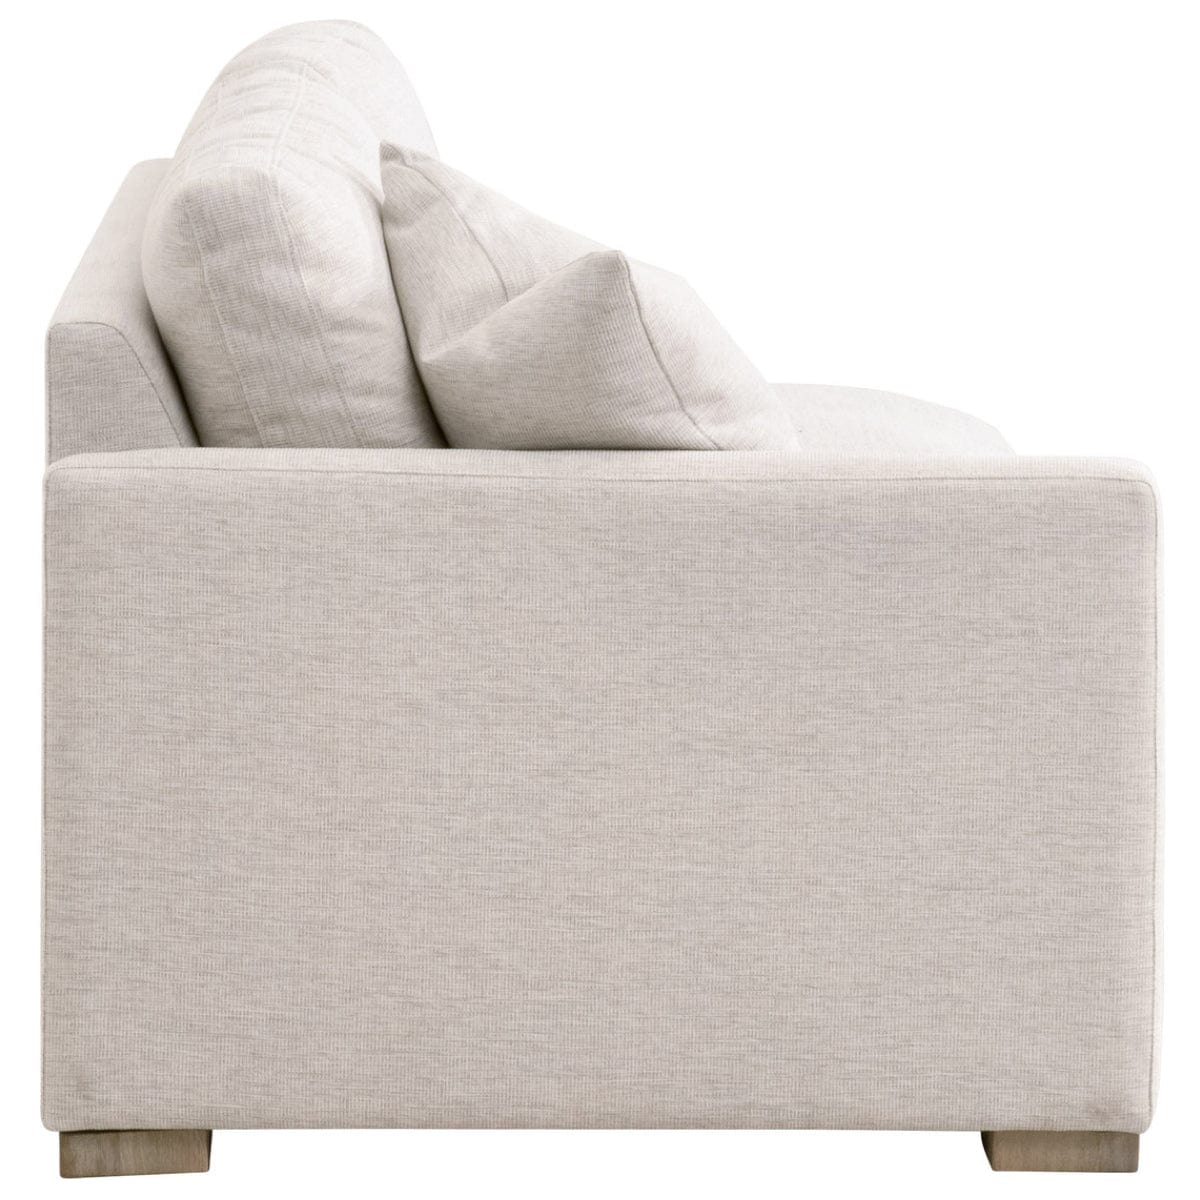 BLU Home Clara Modular Sectional Furniture orient-express-